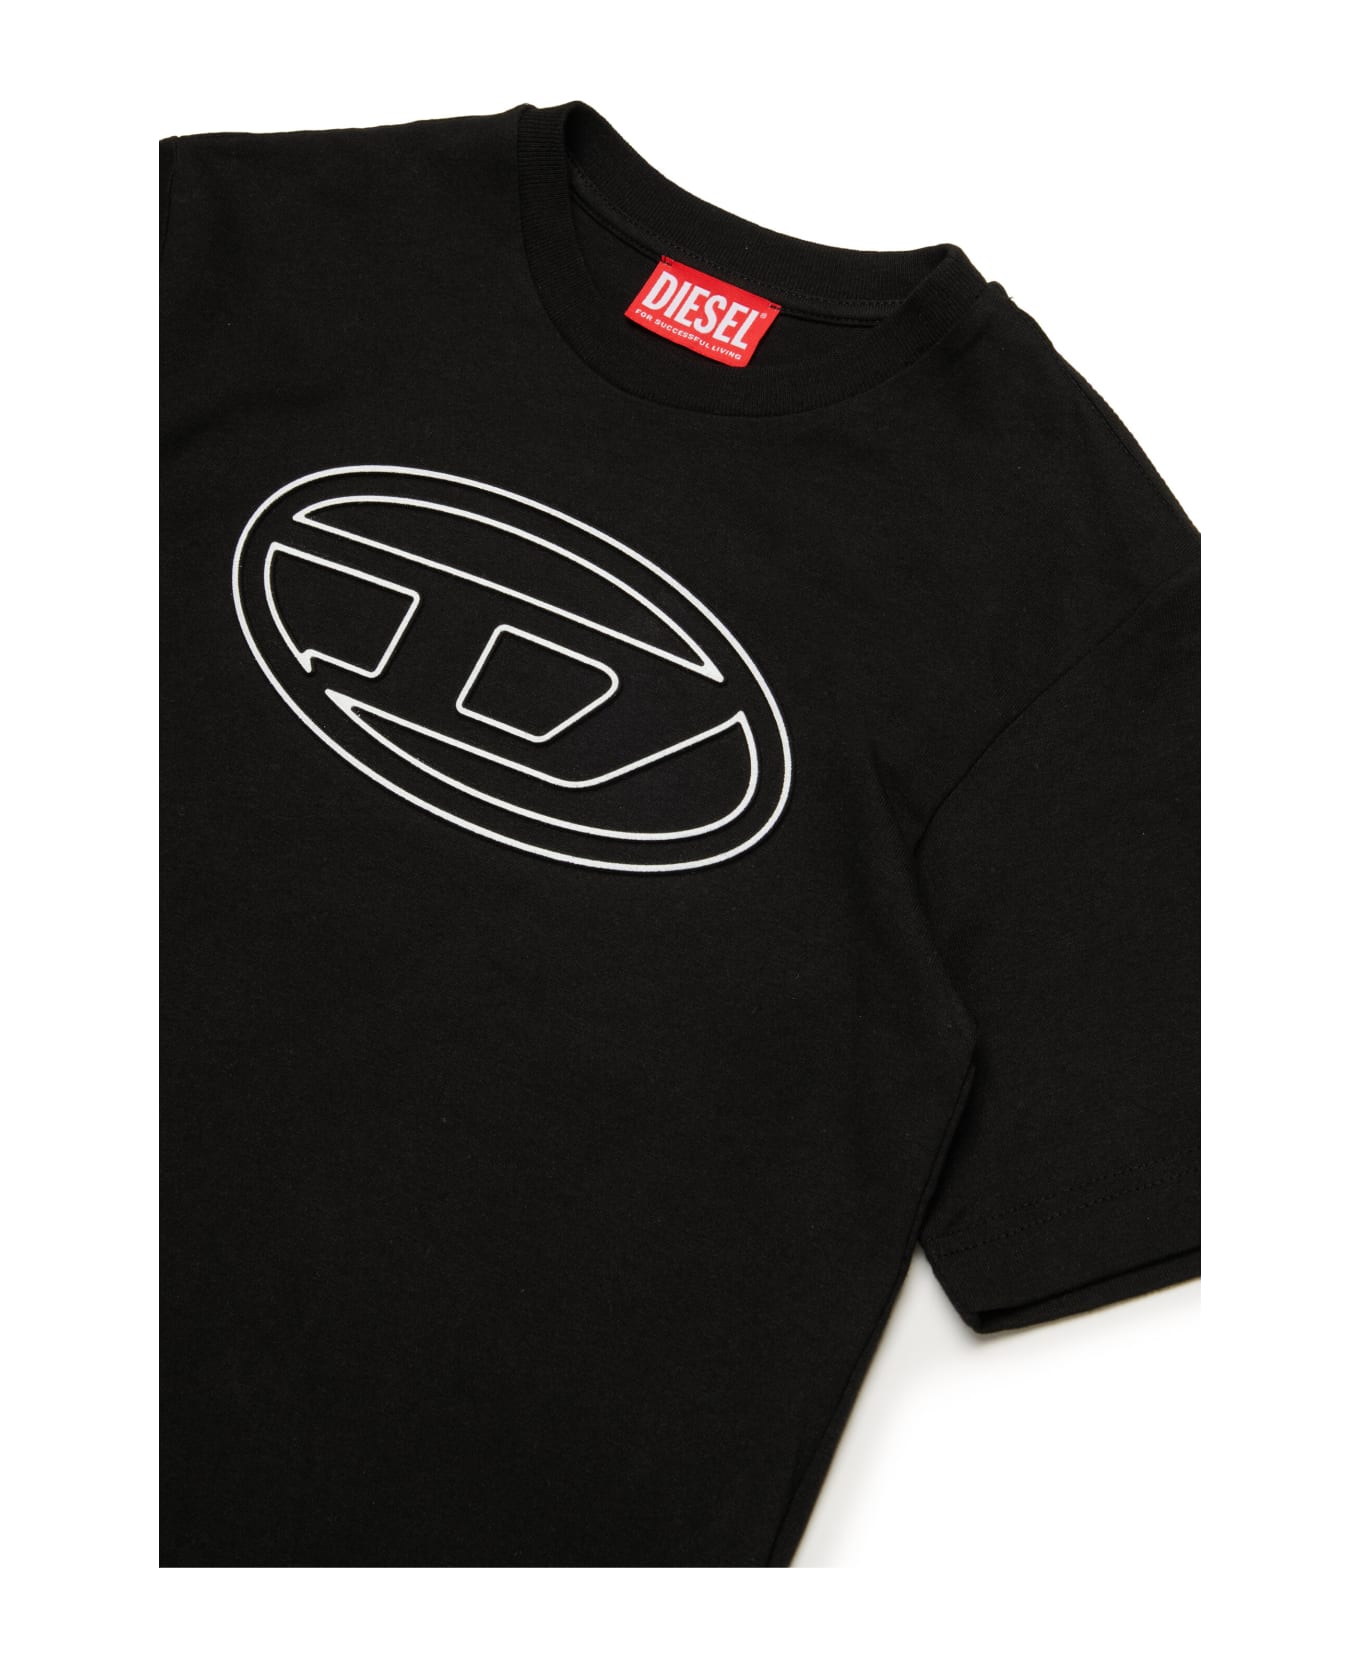 Diesel Tjustbigoval Over T-shirt Diesel Oval D Branded T-shirt - Black